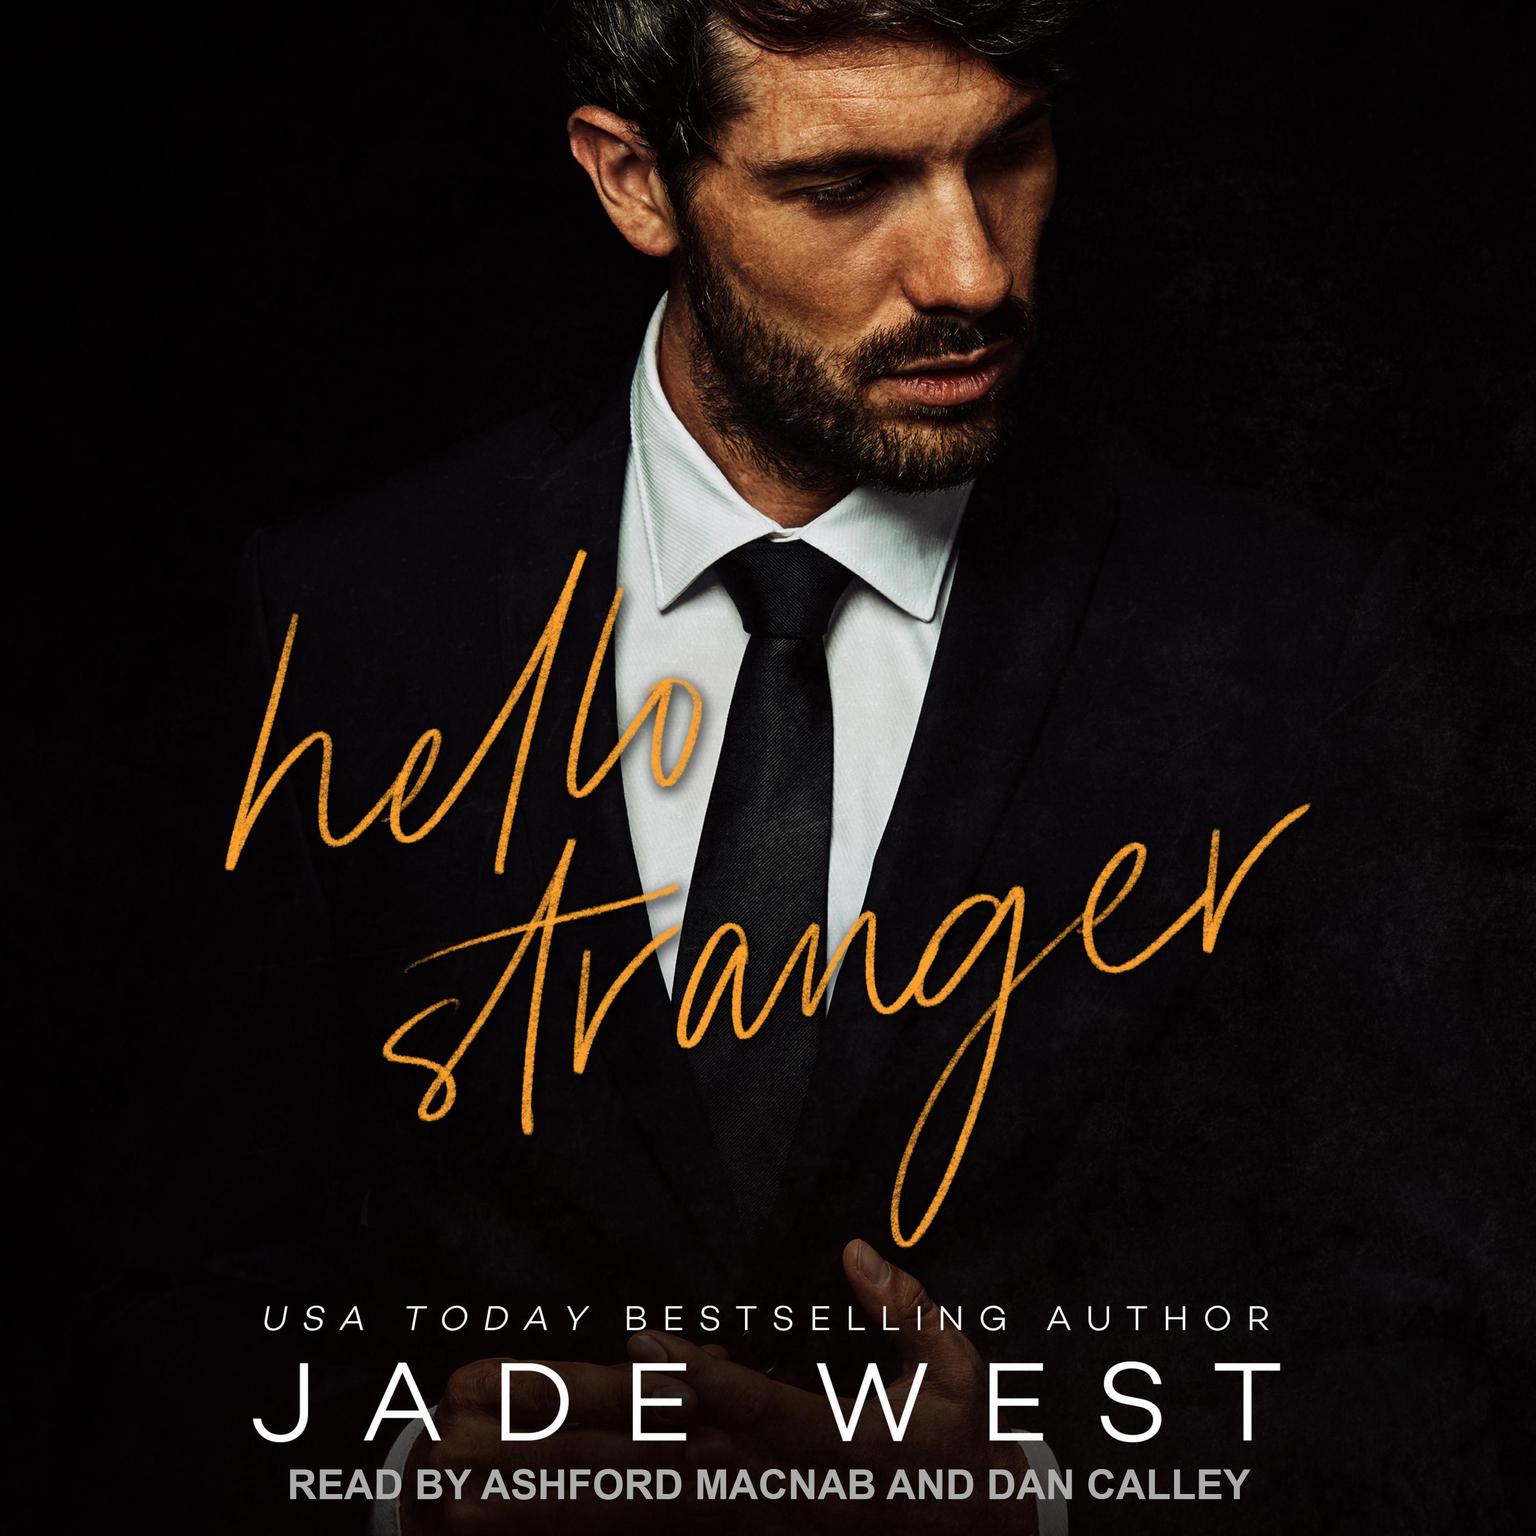 Hello Stranger Audiobook, by Jade West